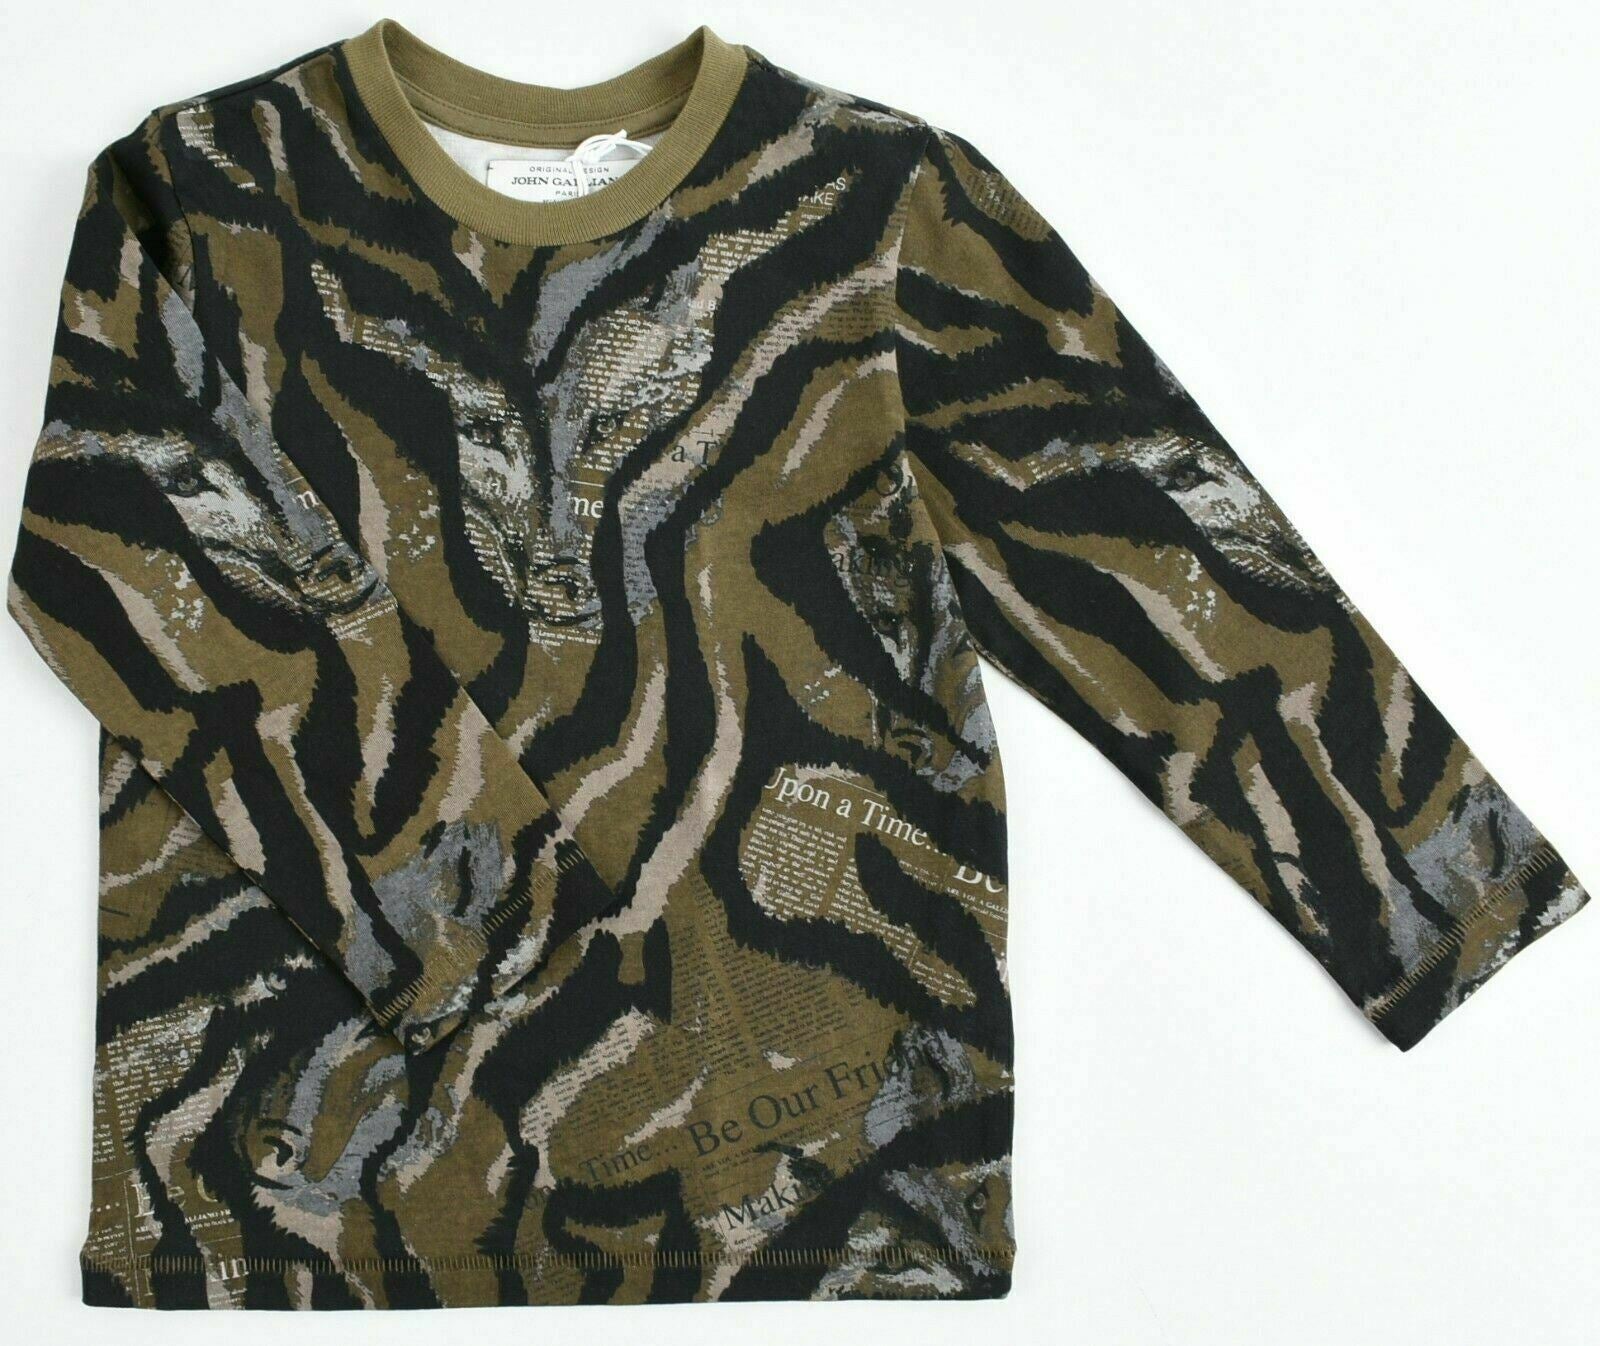 JOHN GALLIANO Boys' Long Sleeve Top, Khaki/Black Pattern, size 4 years